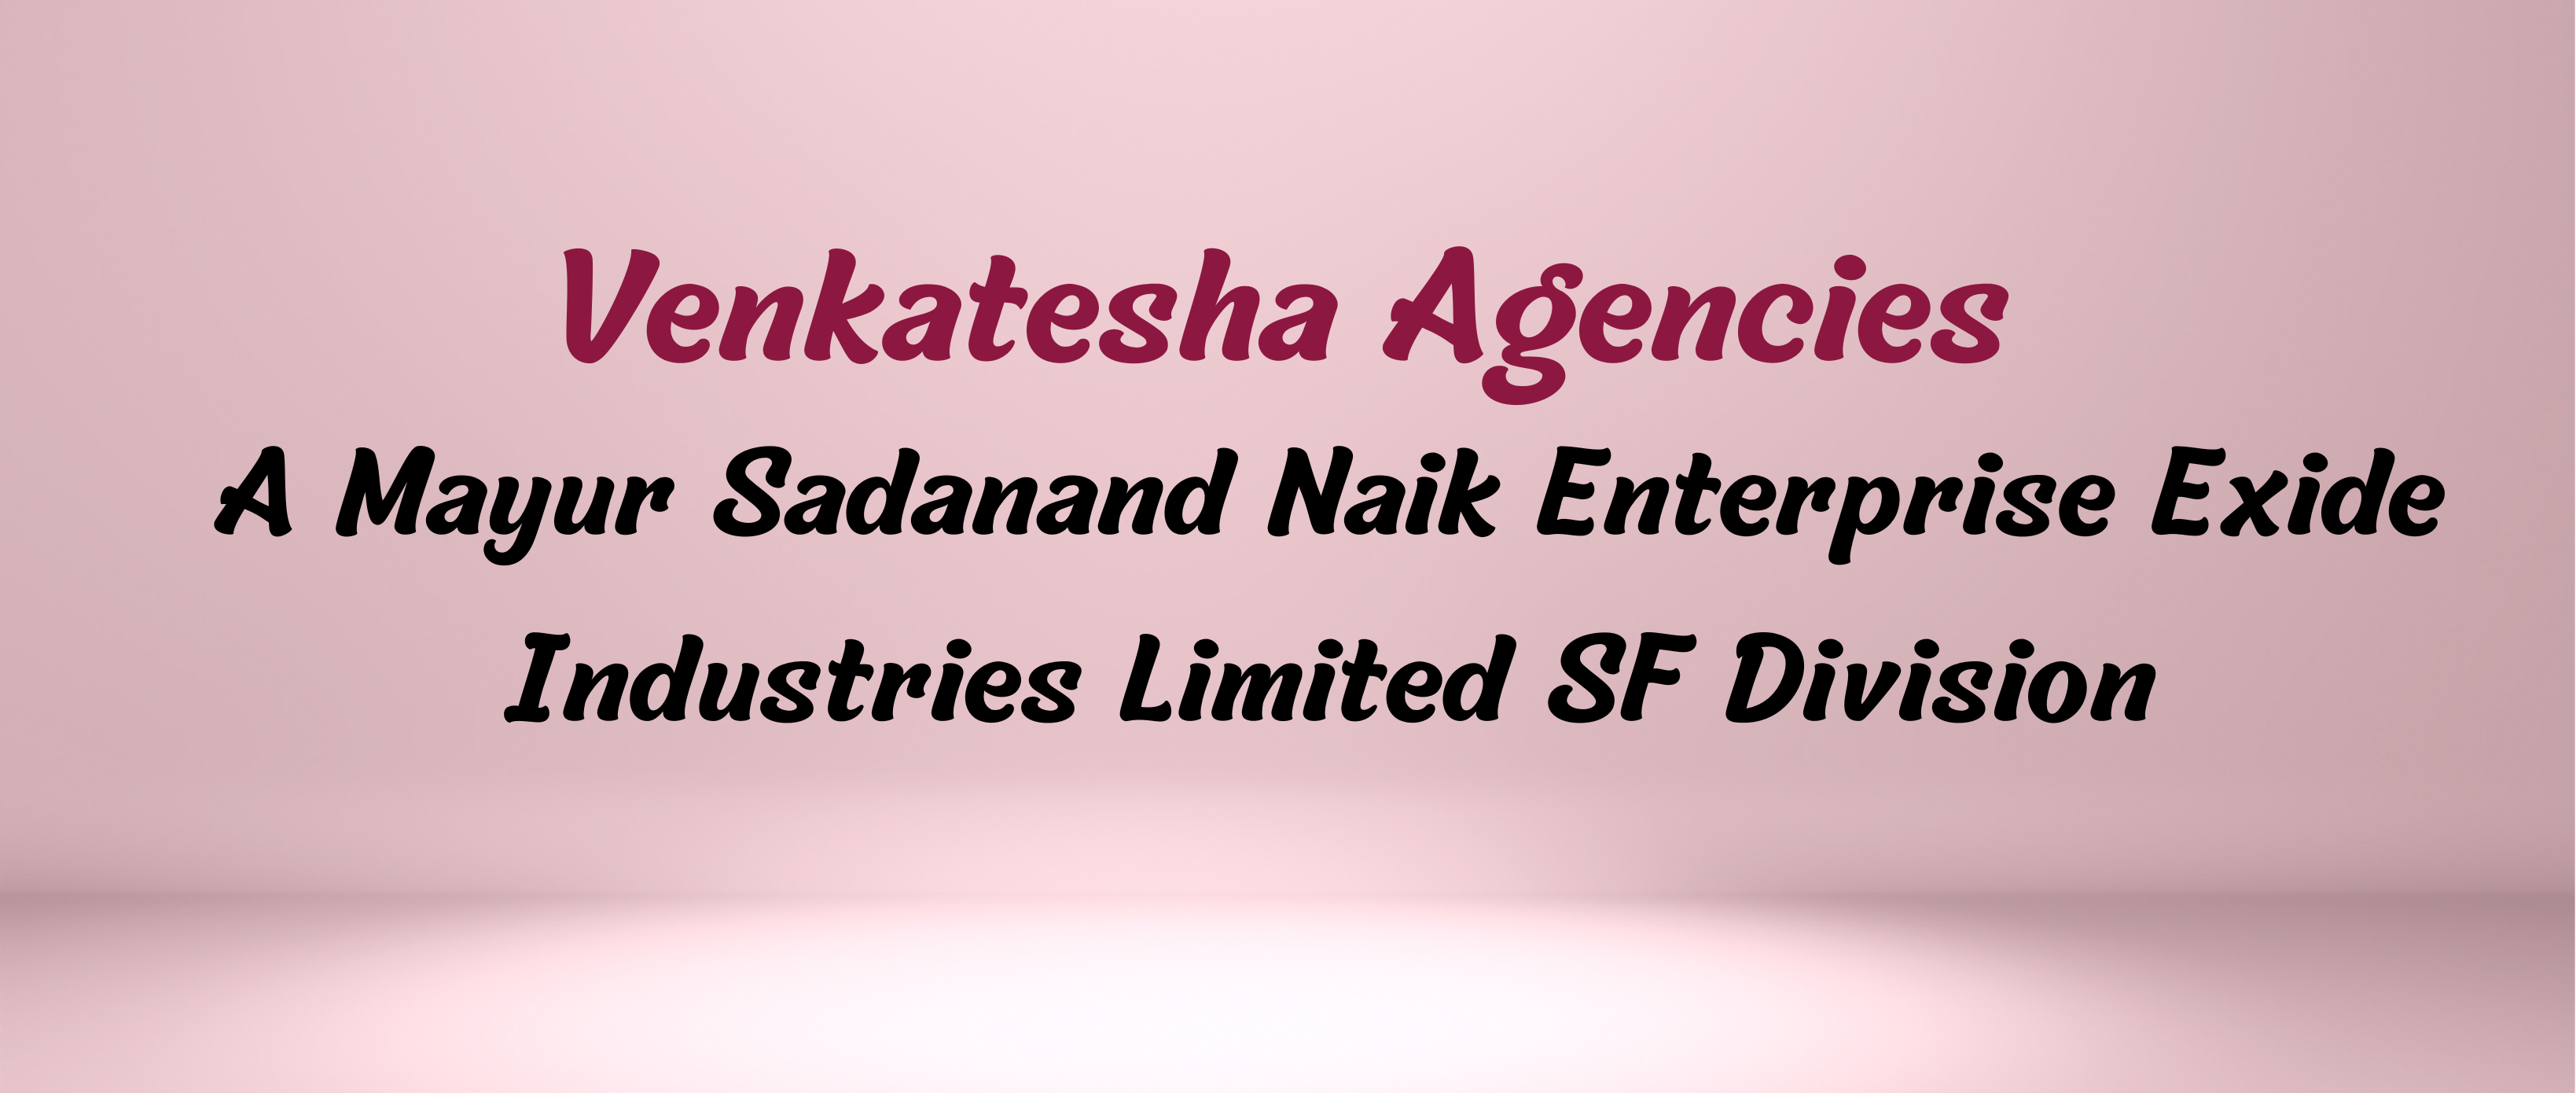 Venkatesha Agencies